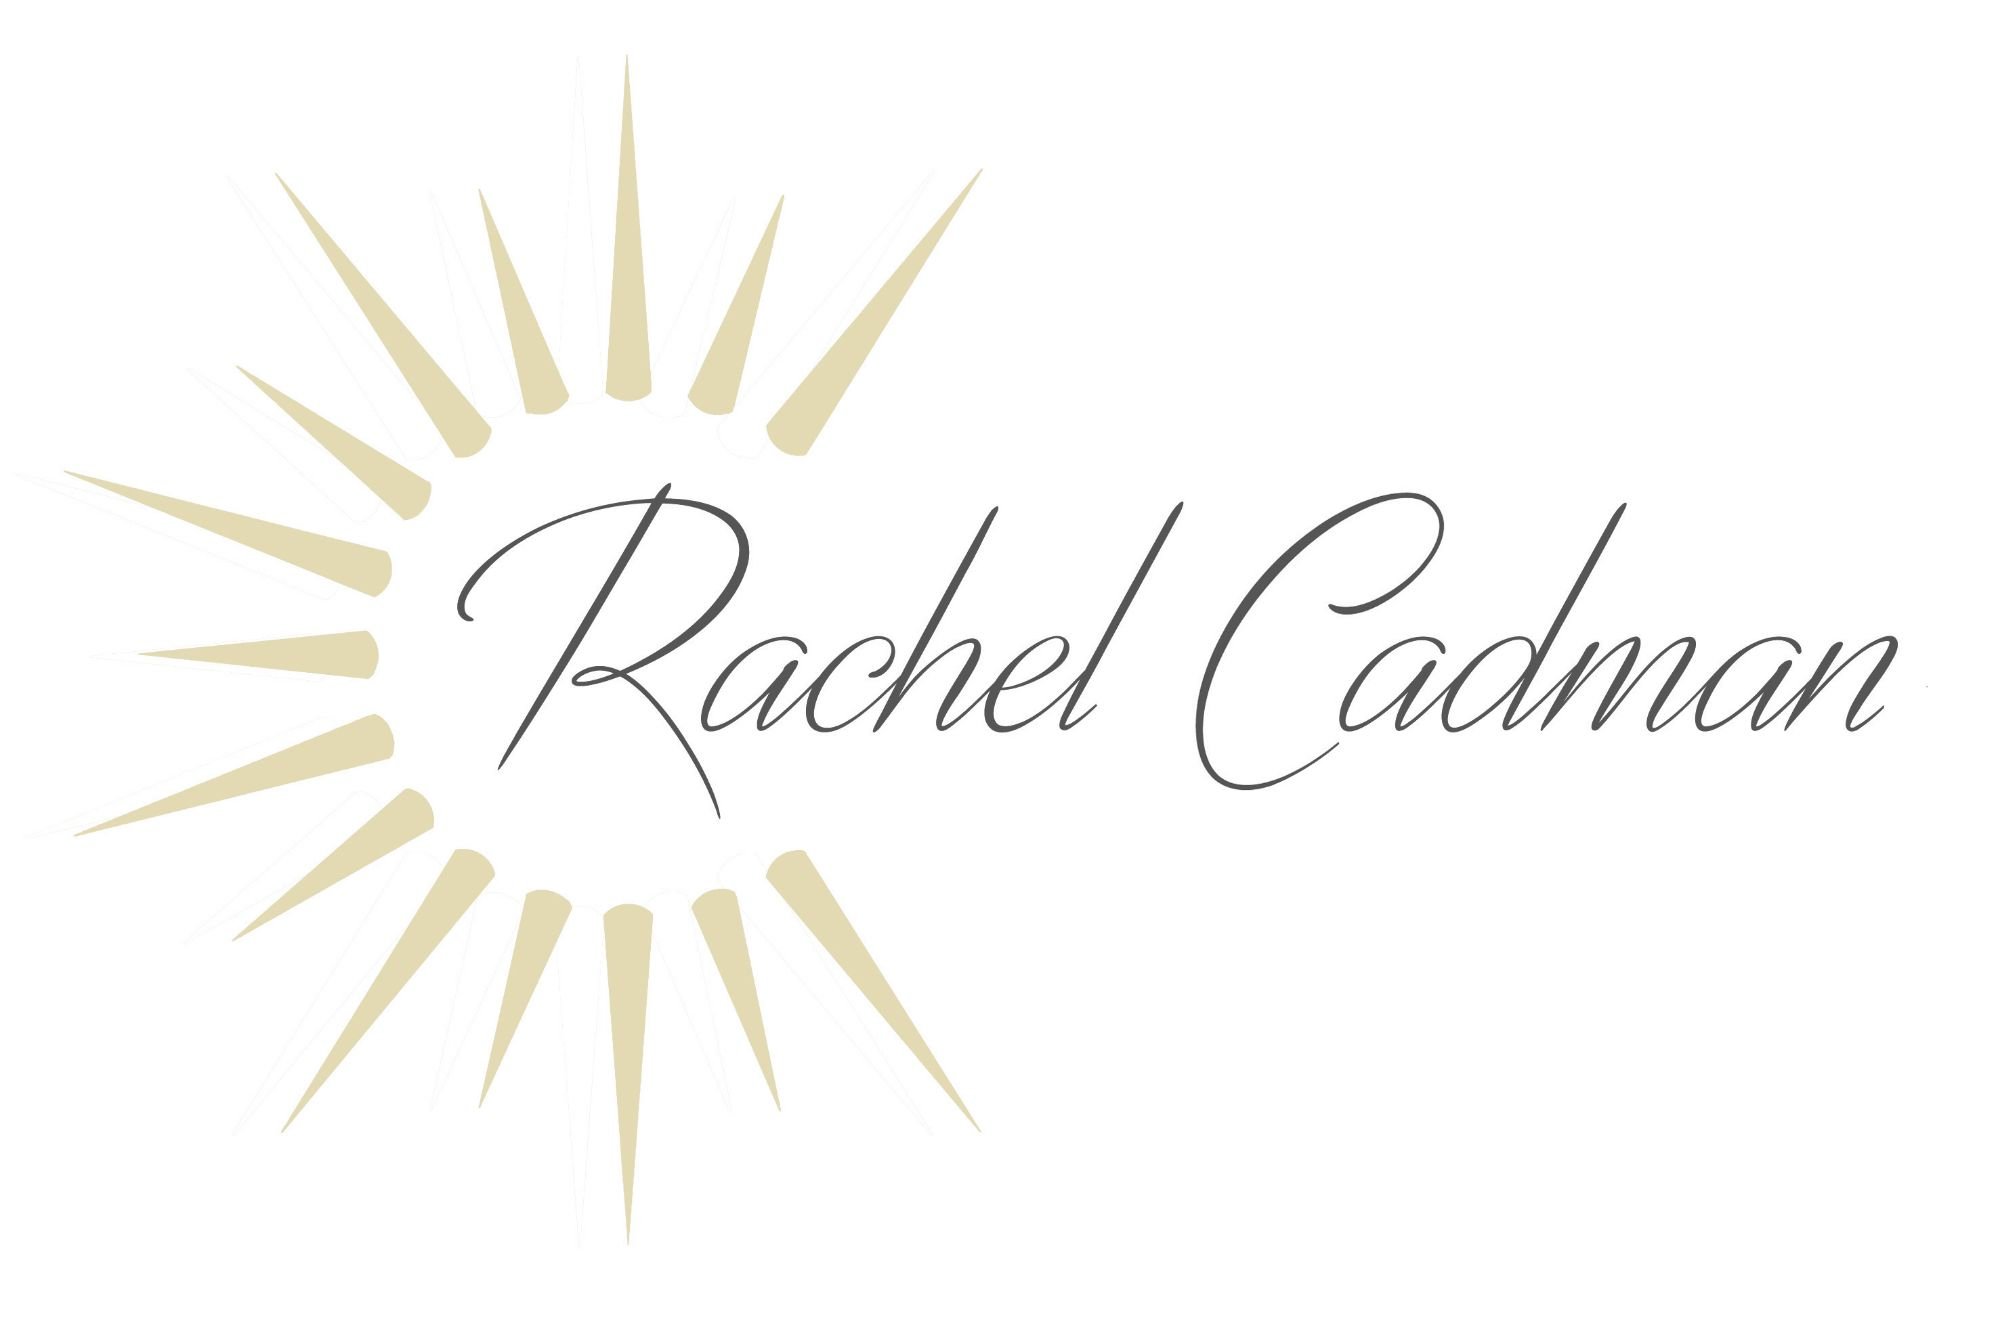 Printing Parties with Rachel logo